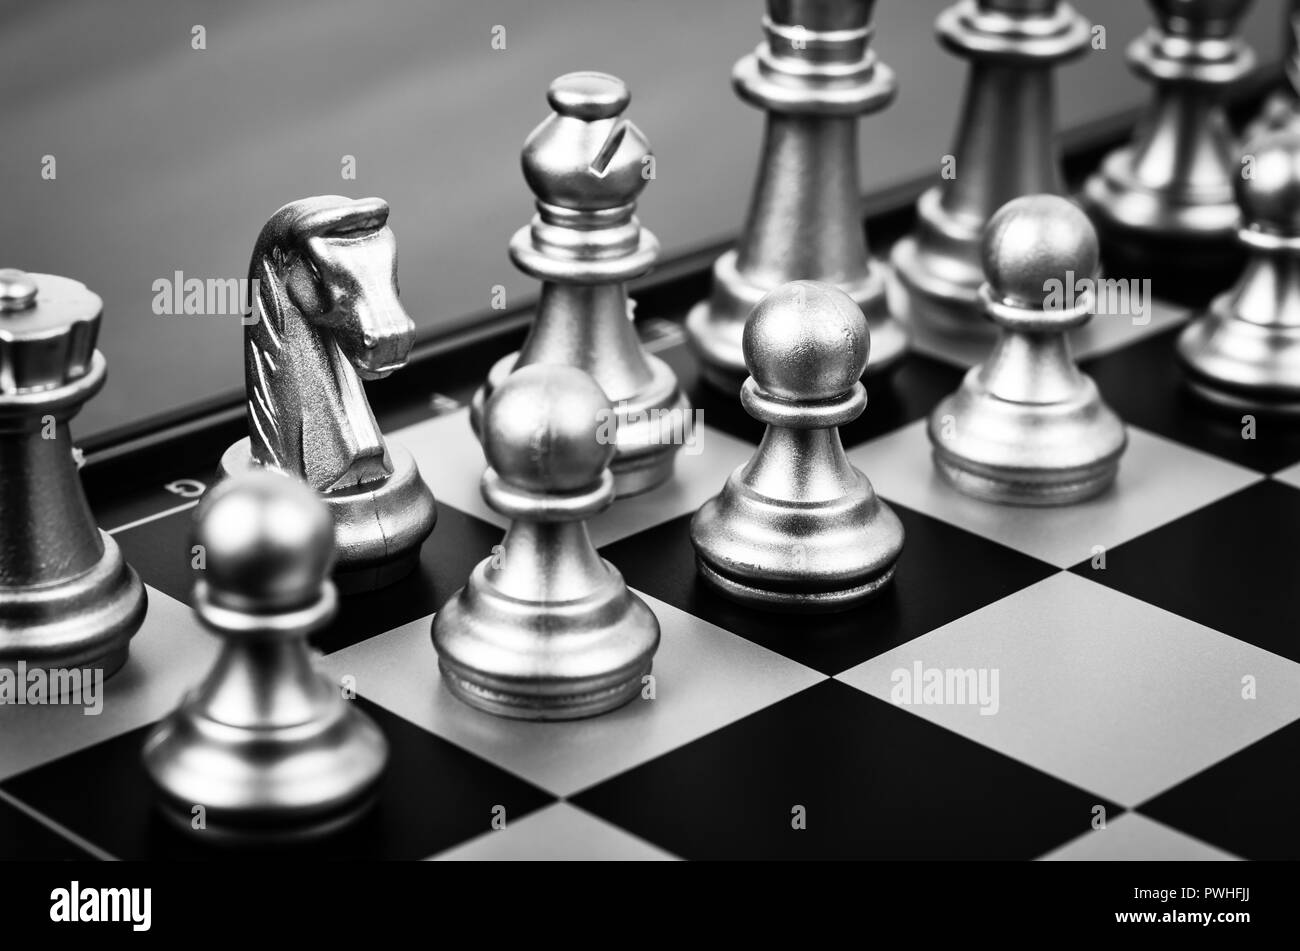 Volumetric chessboard, no figures, 3d, no background